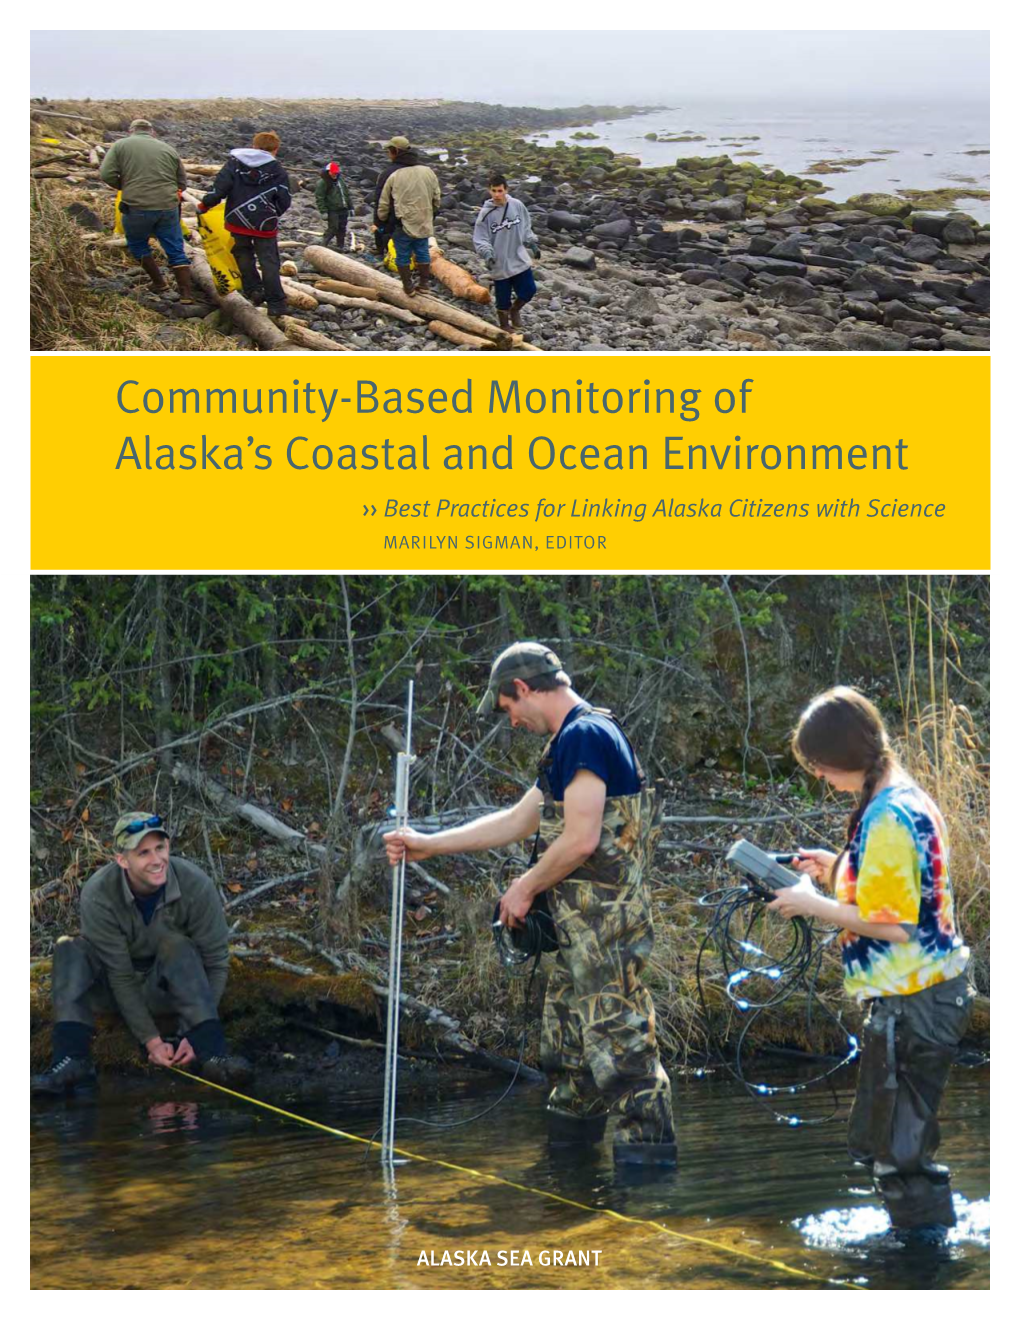 Community-Based Monitoring of Alaska's Coastal and Ocean